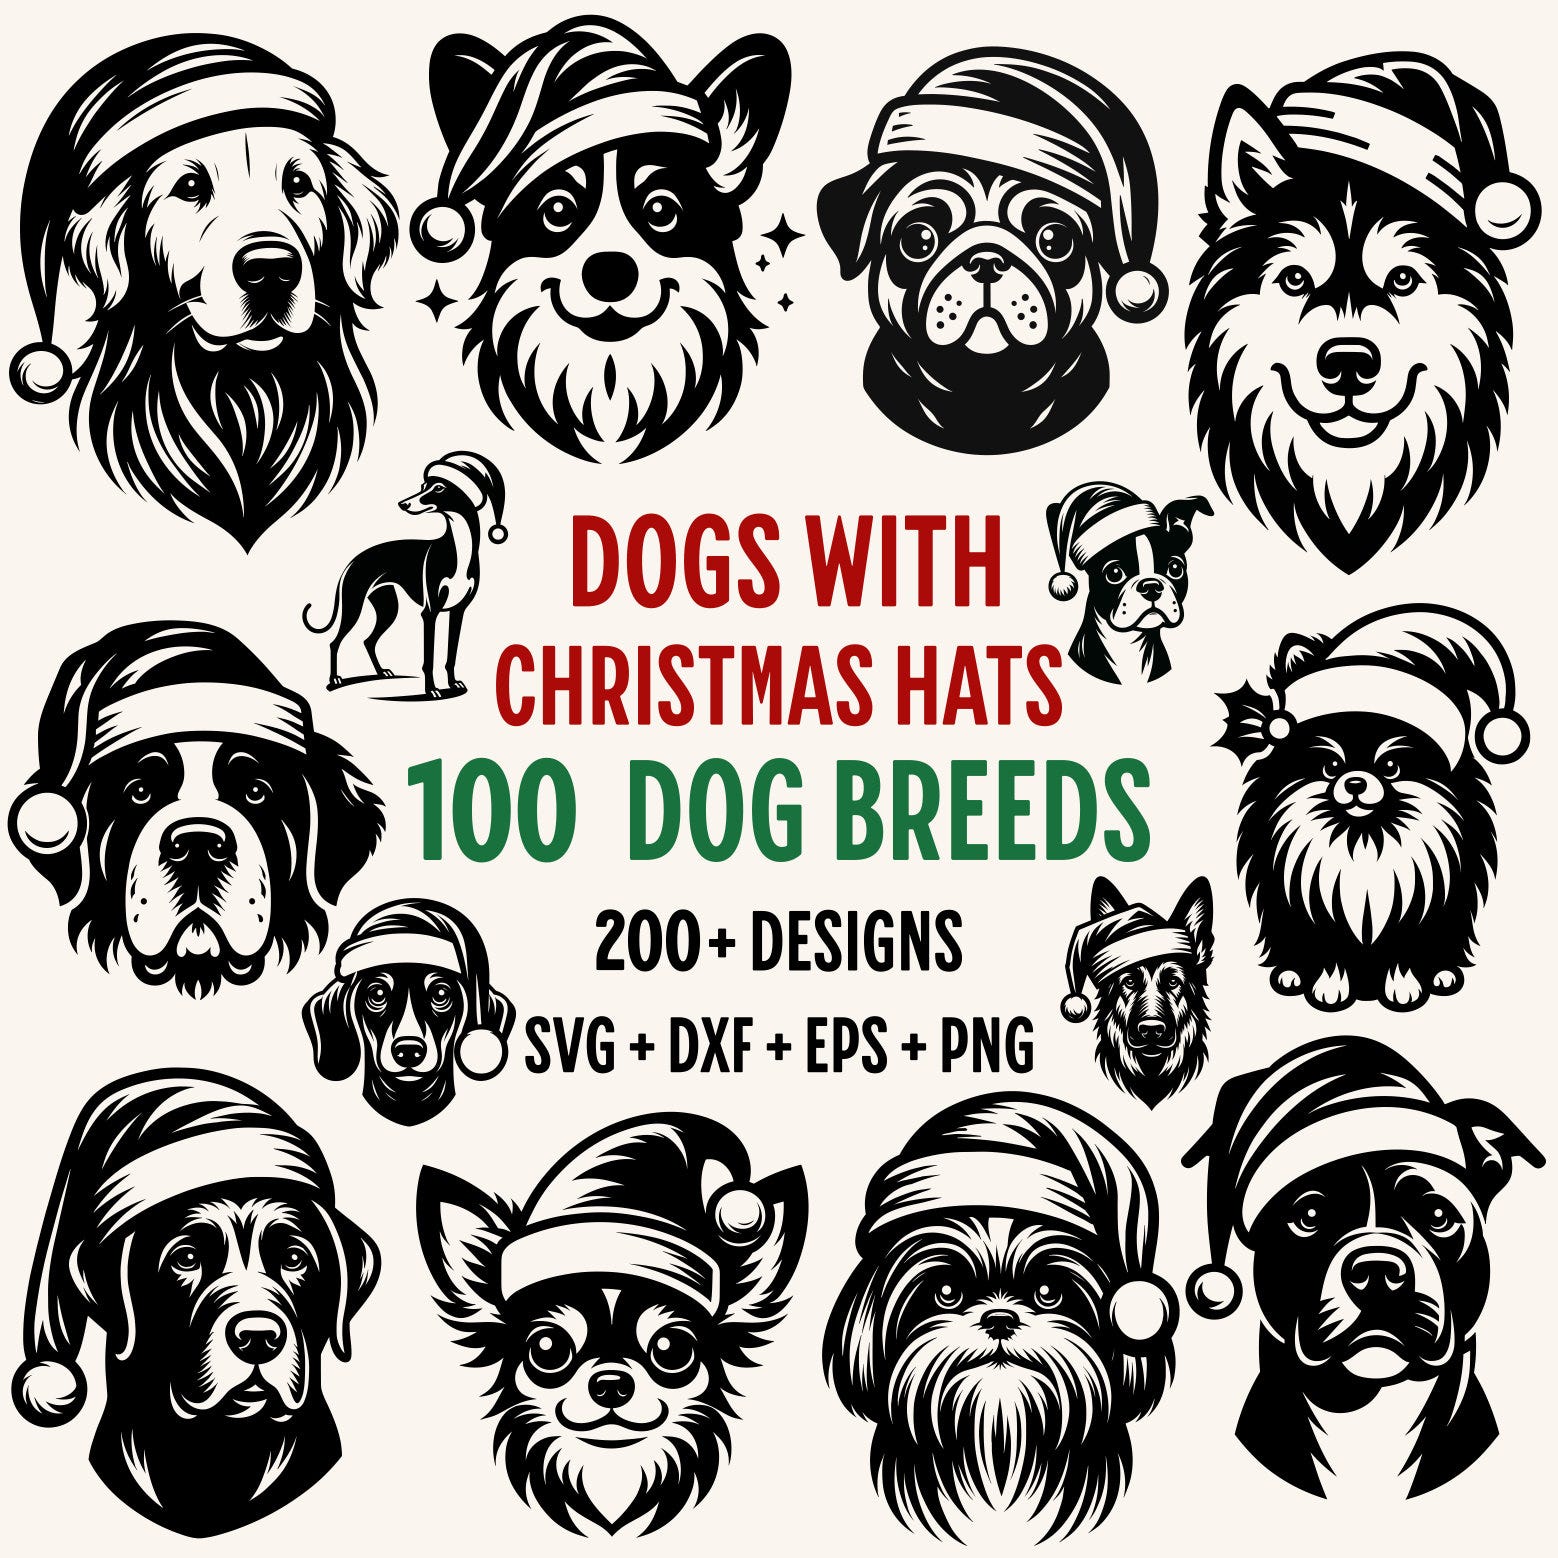 Dogs With Santa Hats svg Bundle - Christmas Dogs svg - Cut File - svg - eps - dxf - png - Silhouette - Cricut file - Digital File